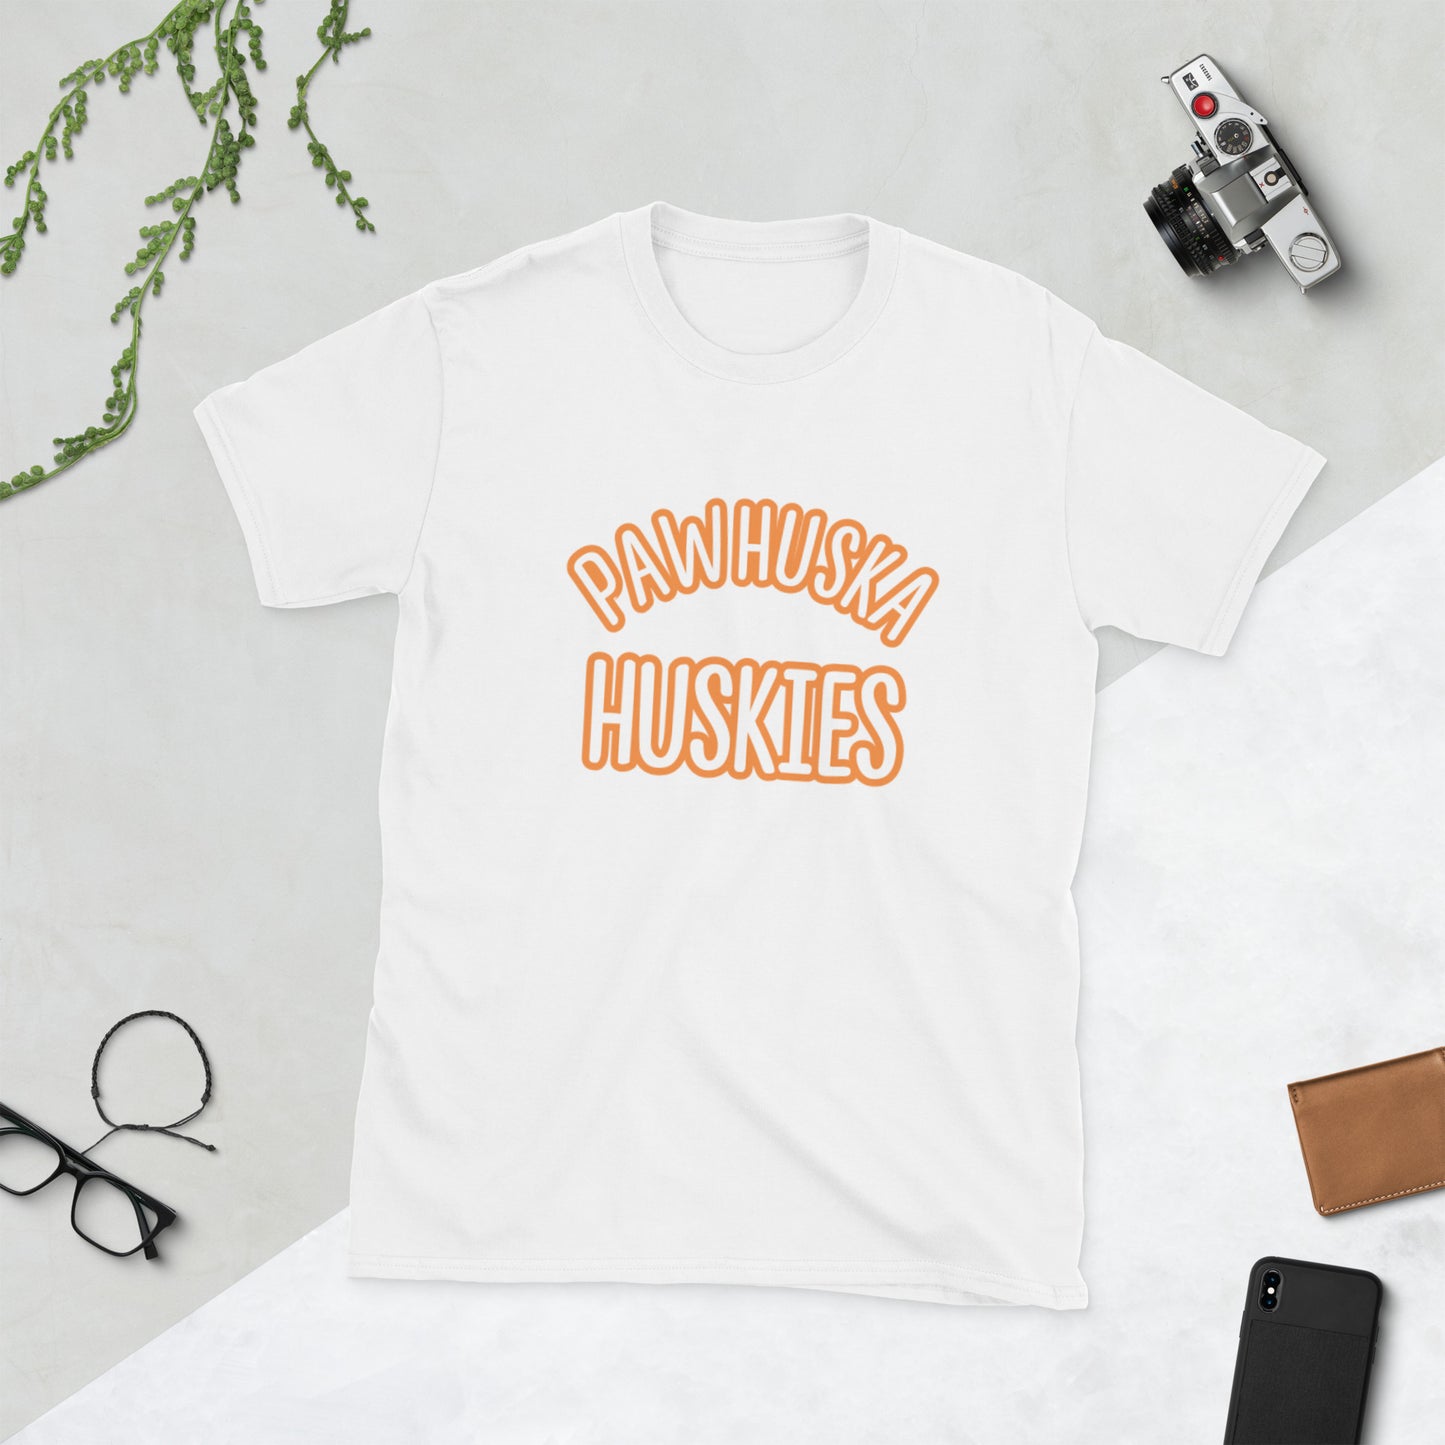 PAWHUSKA HUSKIES Short-Sleeve Unisex T-Shirt